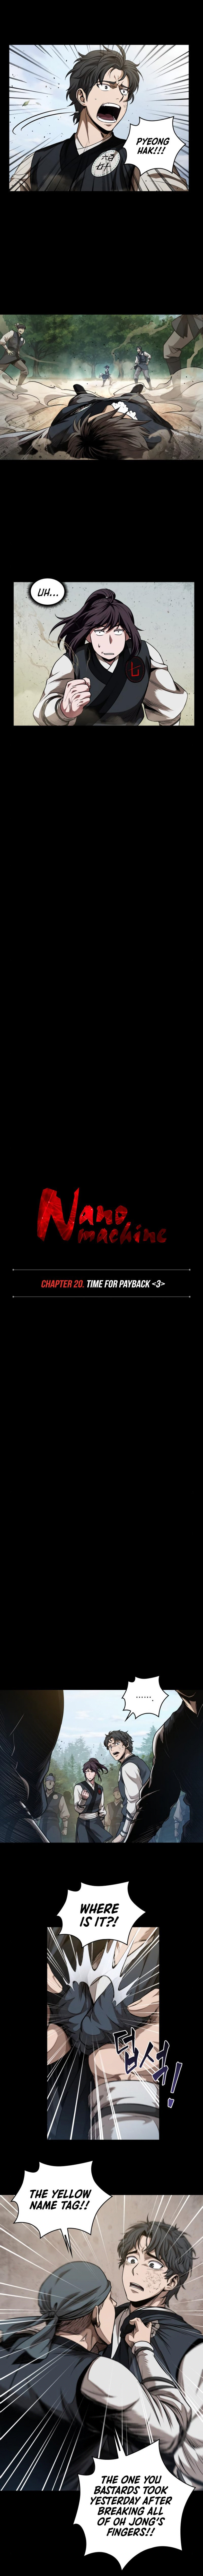 nano-machine-chap-53-2